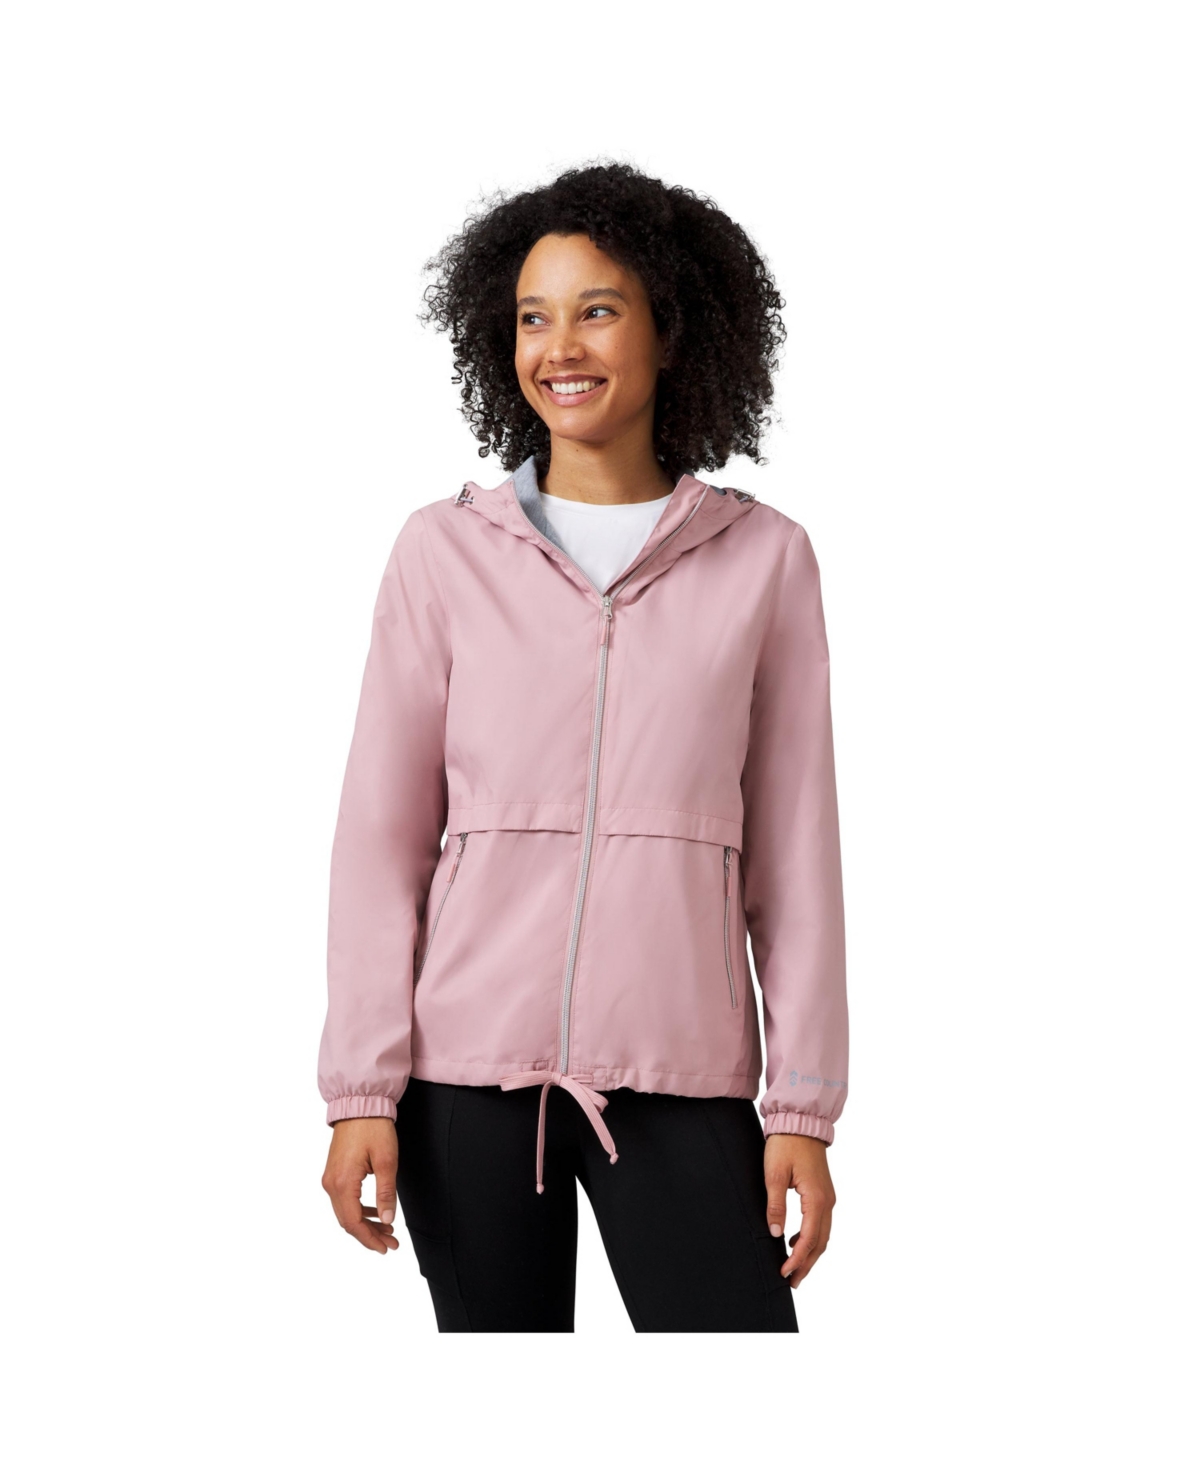 Women's Outland Windshear Jacket - Cameo pink